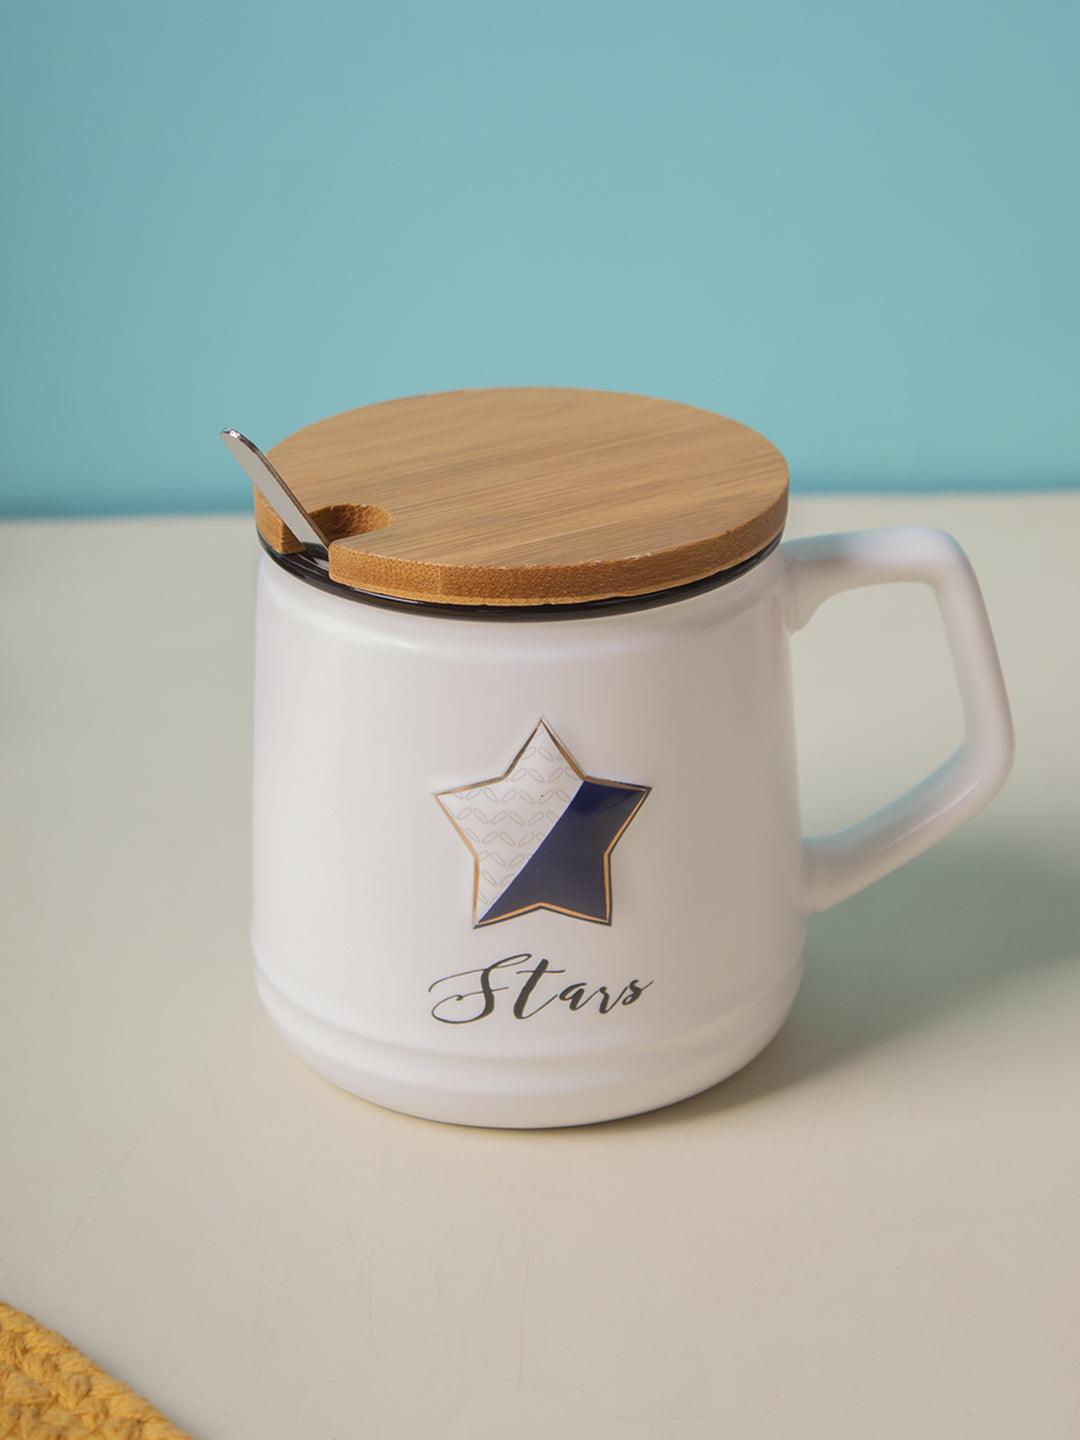 Star Ceramic Coffee Mug With Lid - 350 ml, Mixing Spoon